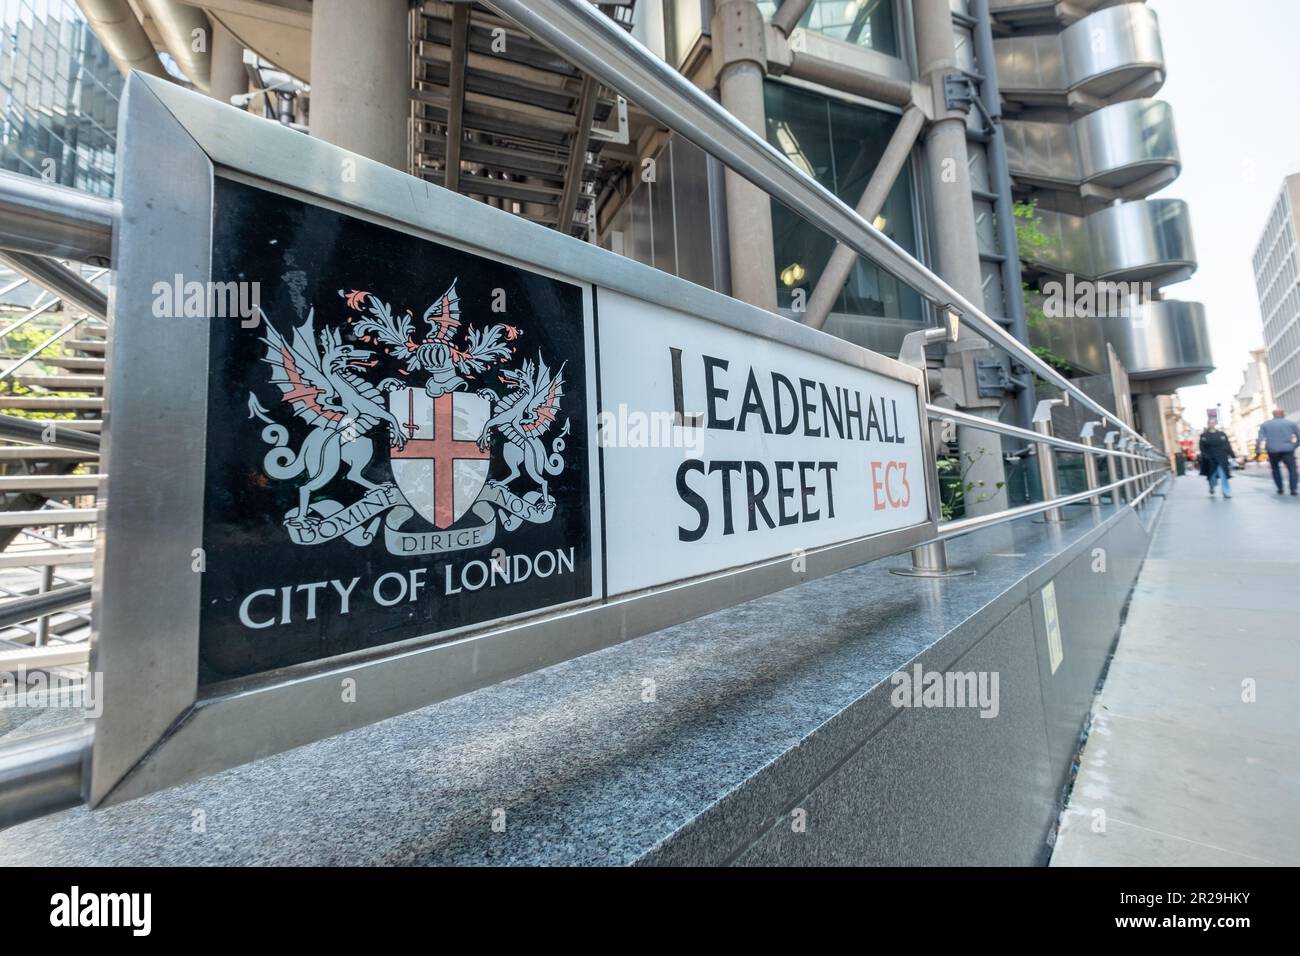 Londra - Maggio 2023: Leadenhall Street EC3, strada storica nella City of London Foto Stock